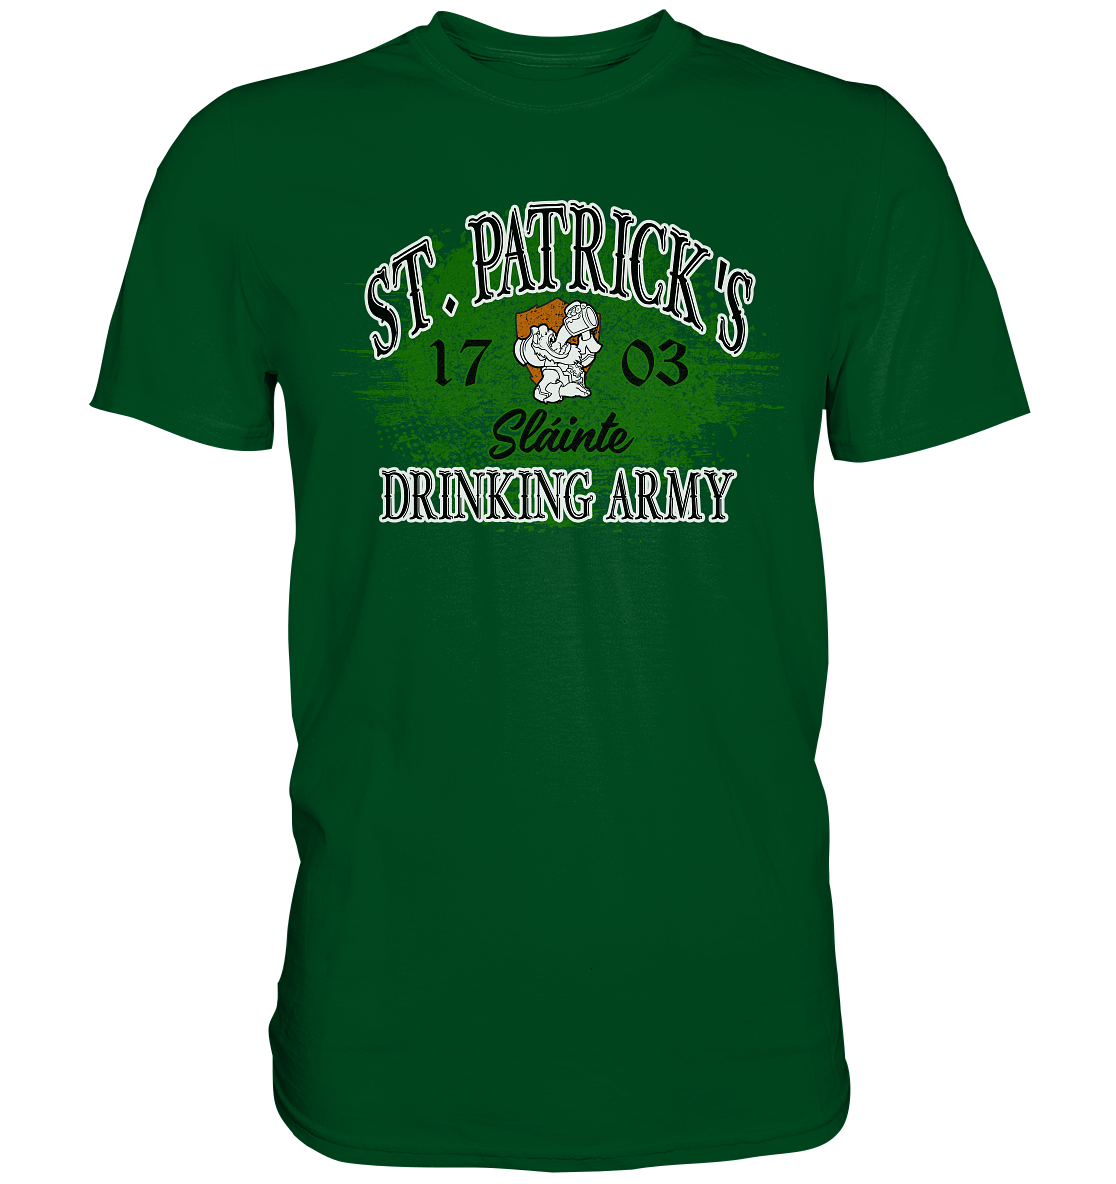 St. Patrick's Drinking Army "Sláinte" - Premium Shirt